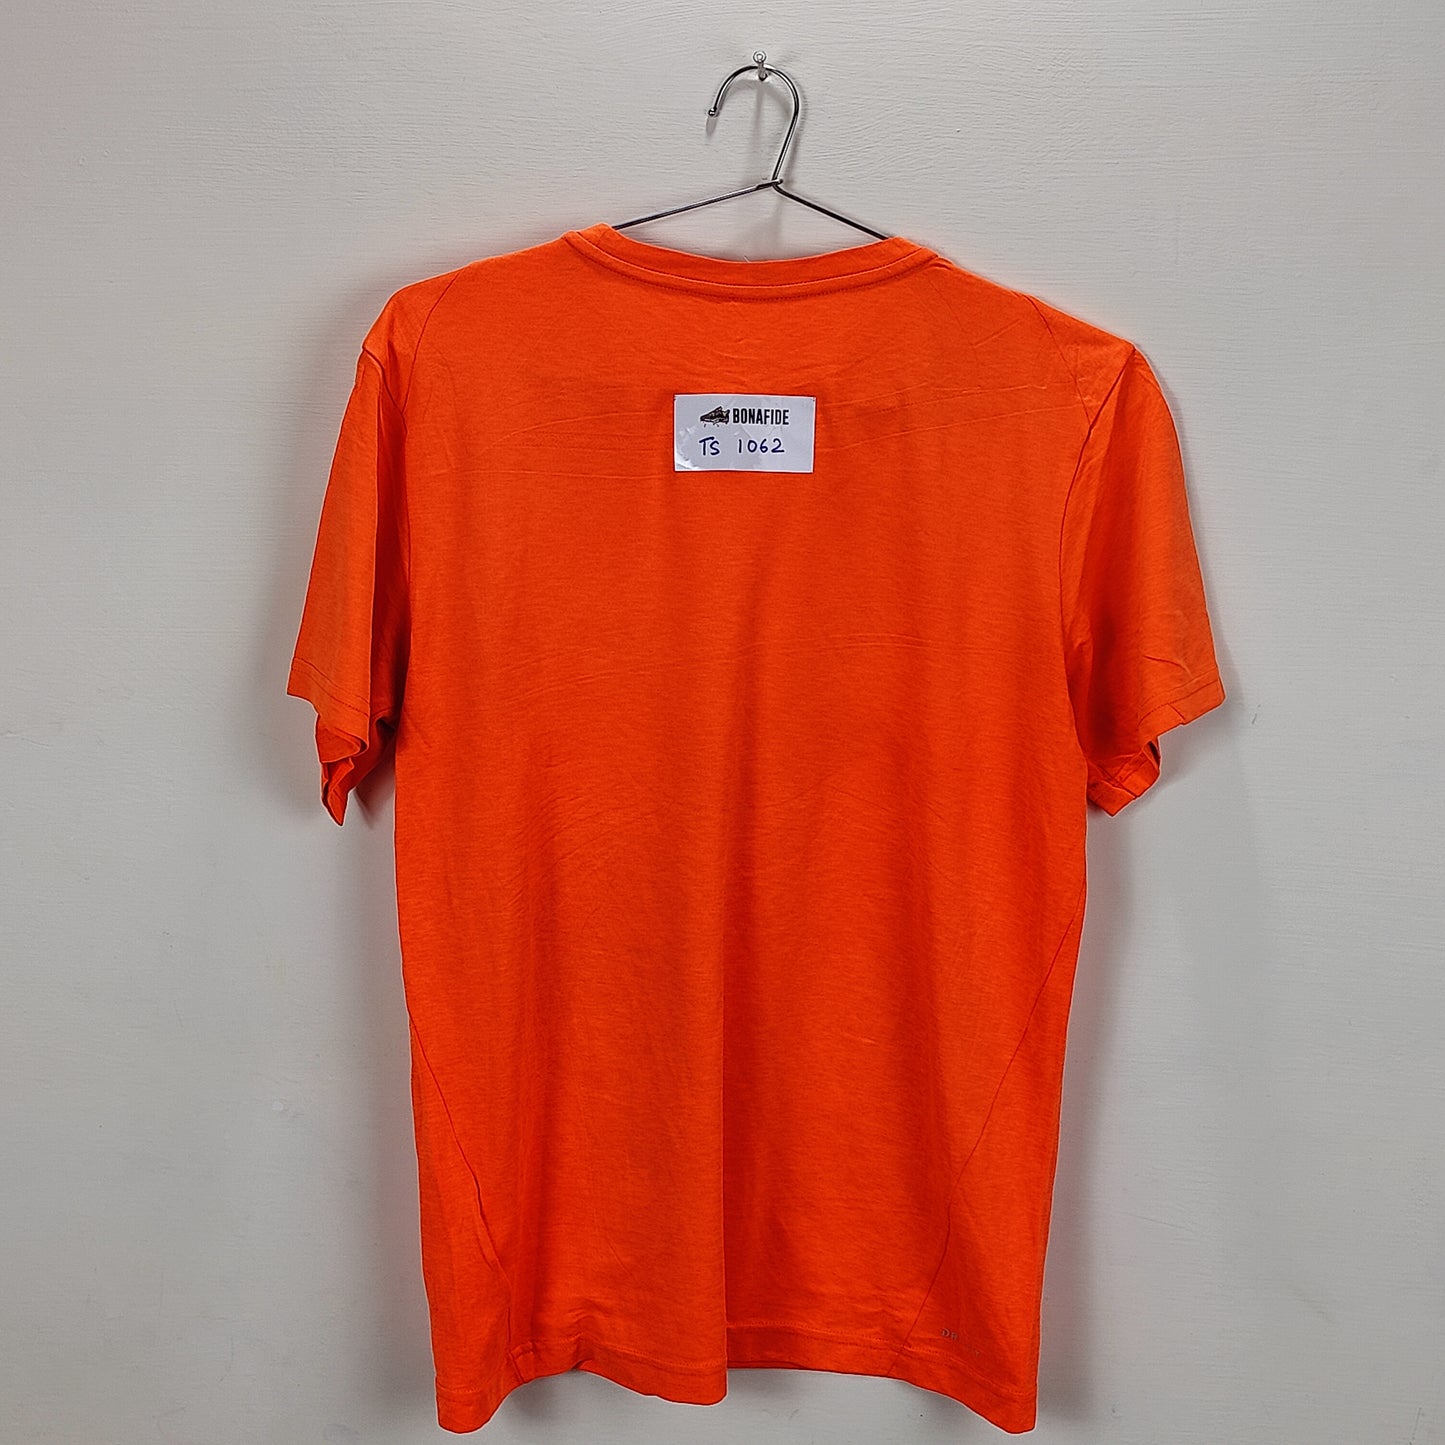 Nike DriFit Shirt Women's - Orange - TS1062